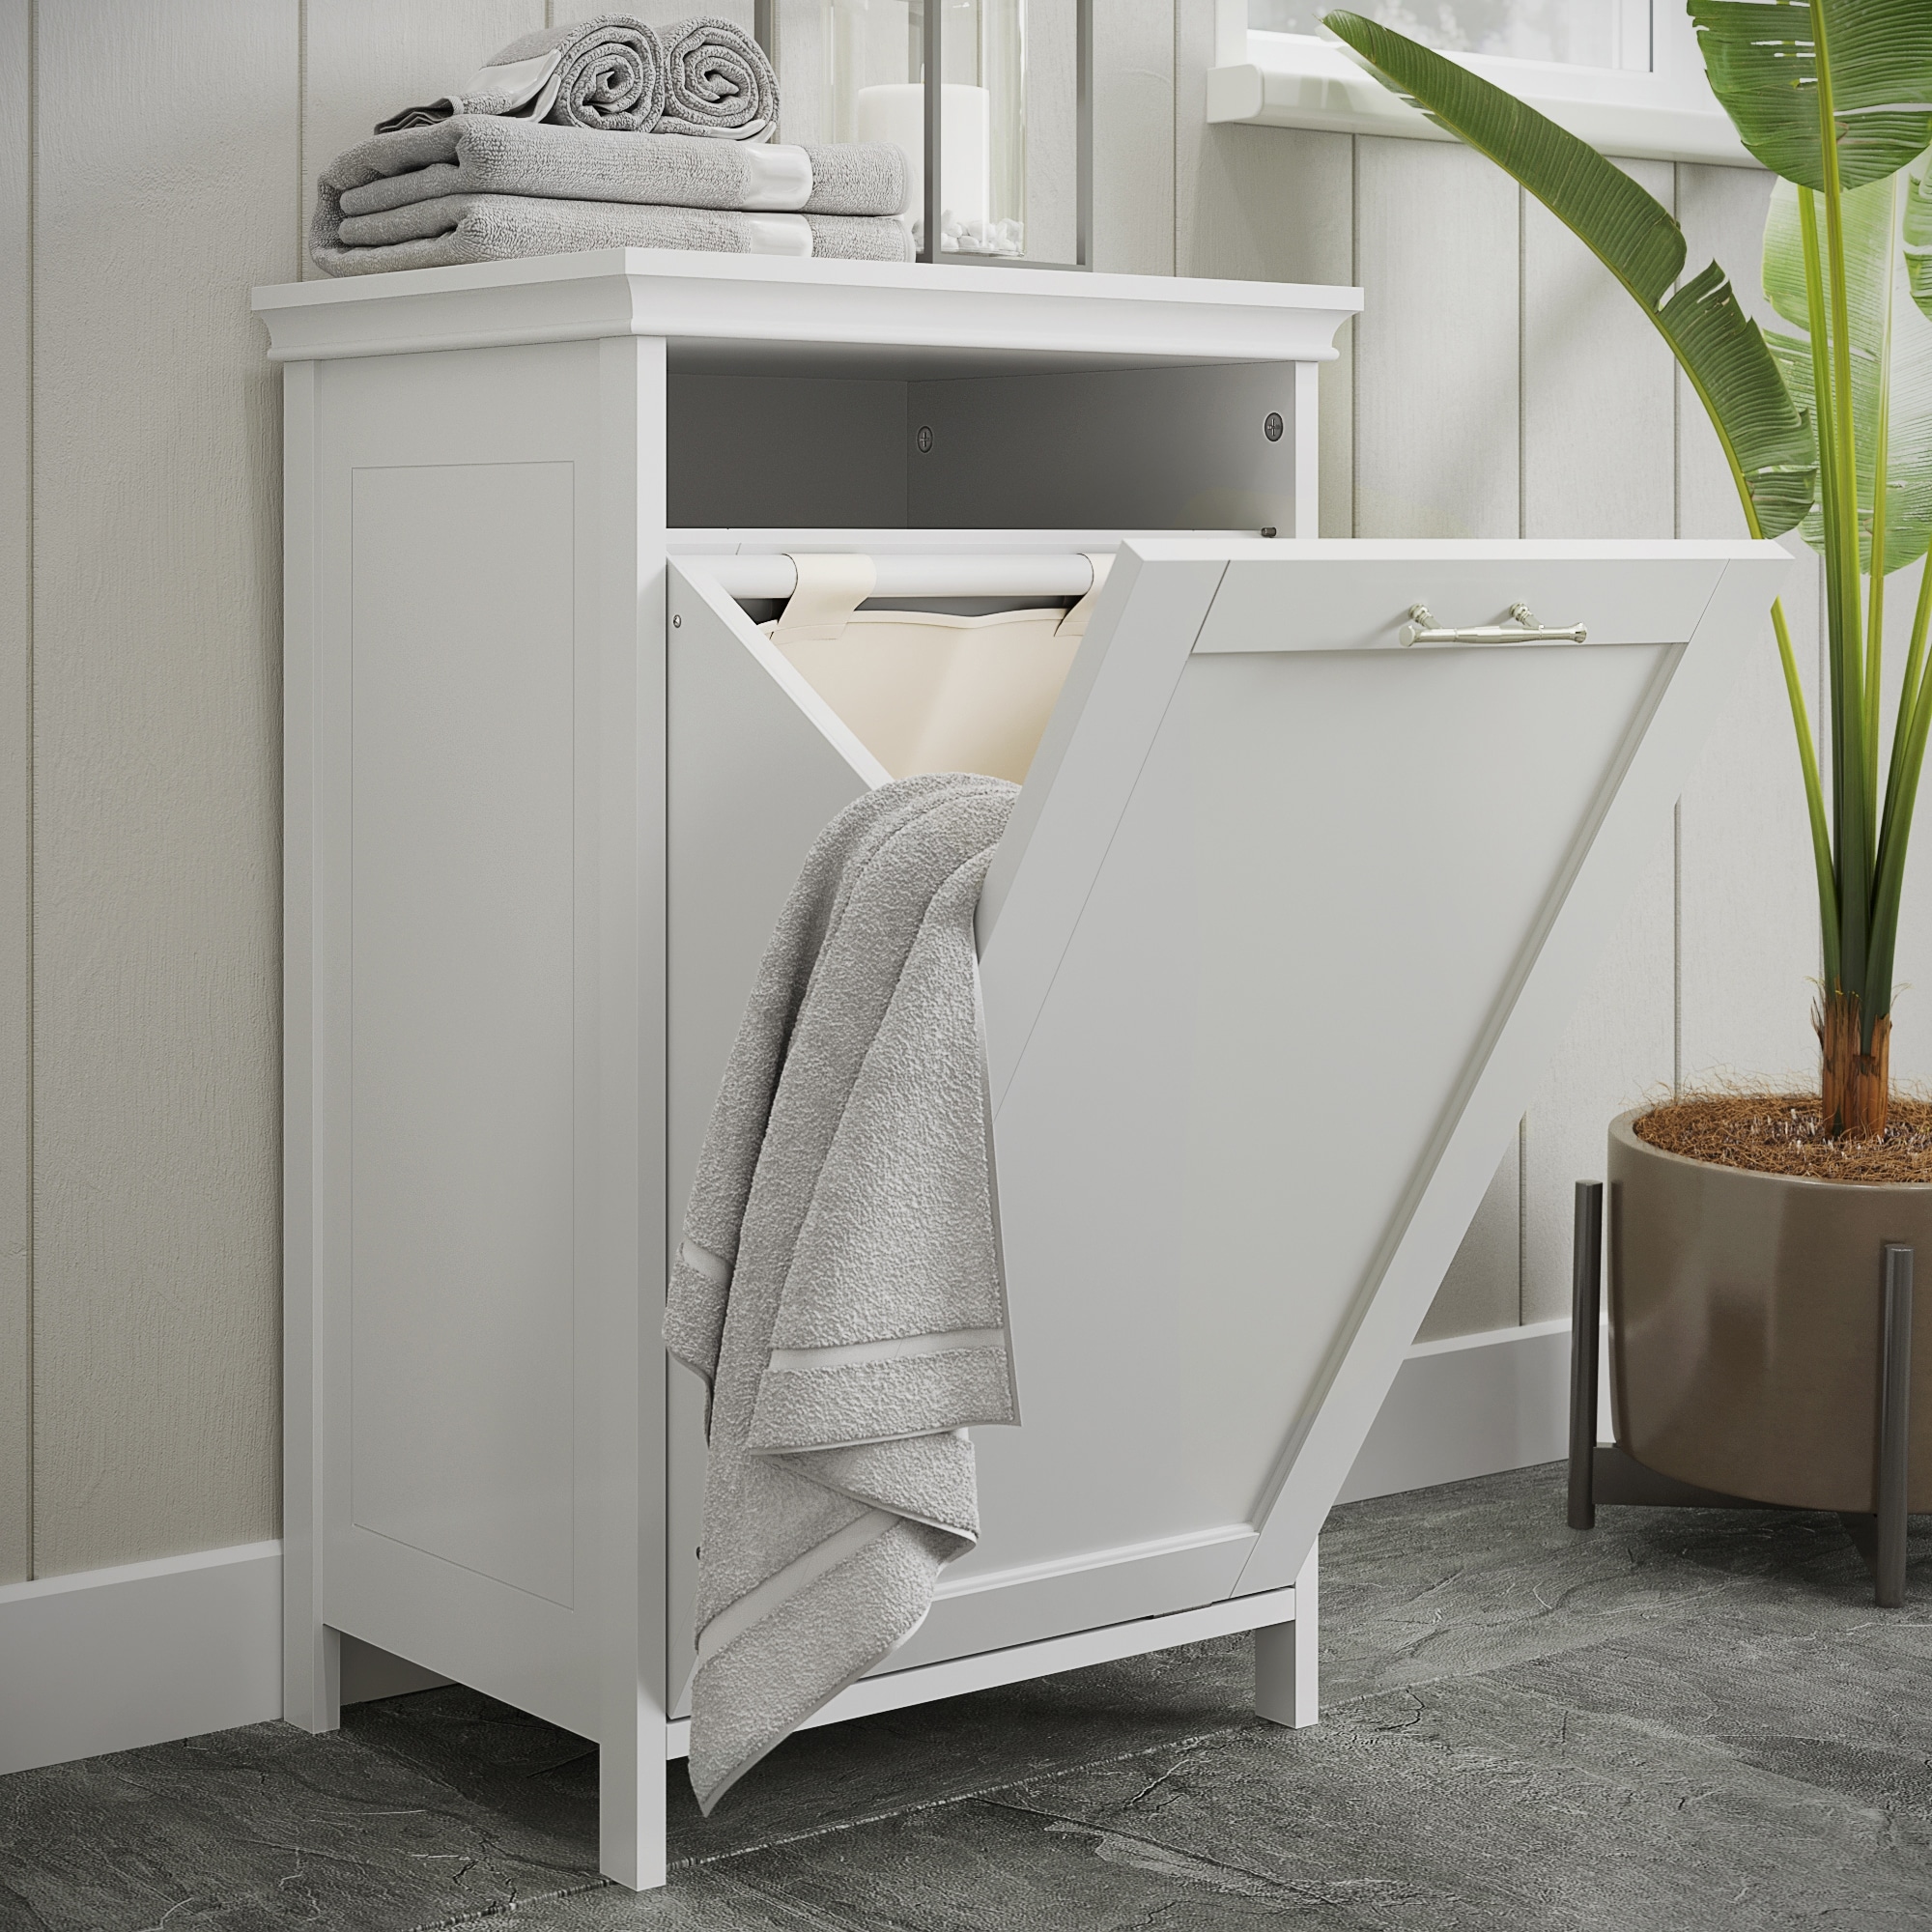 47 Modern Bathroom Storage Shelves with Removable Laundry Basket